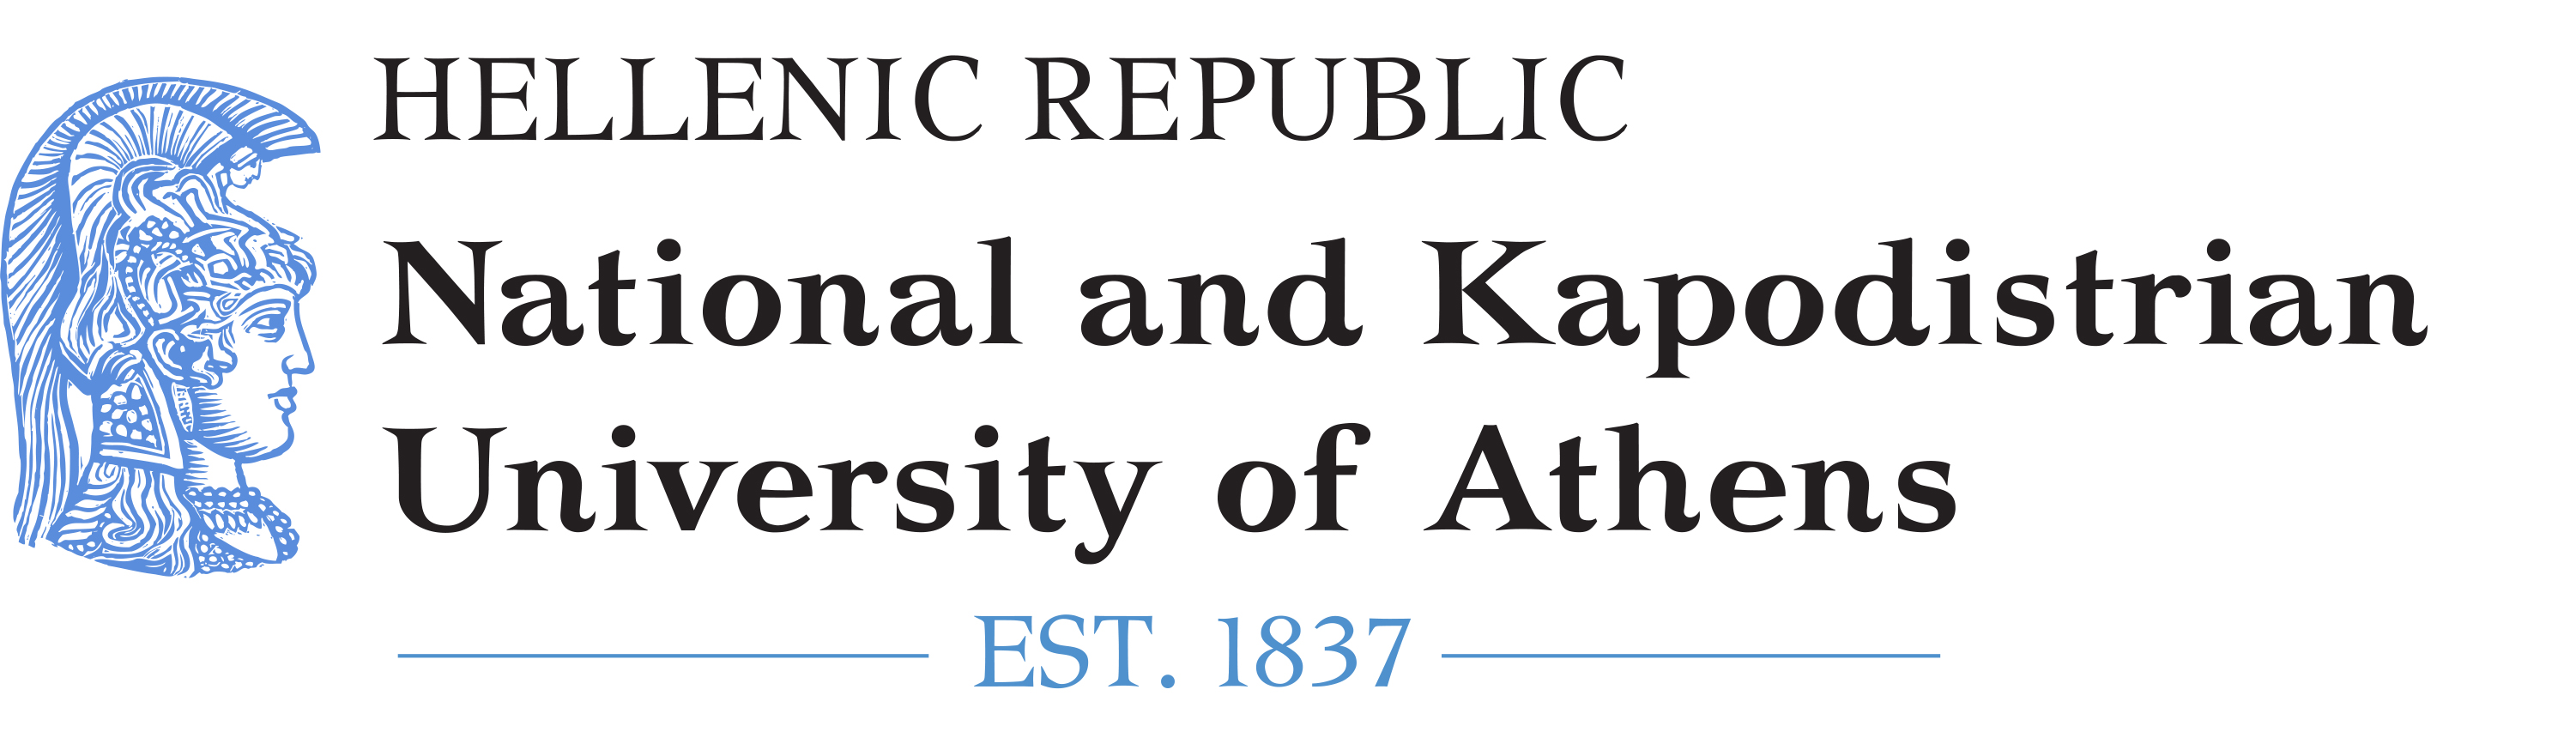 National & Kapodistrian University of Athens logo